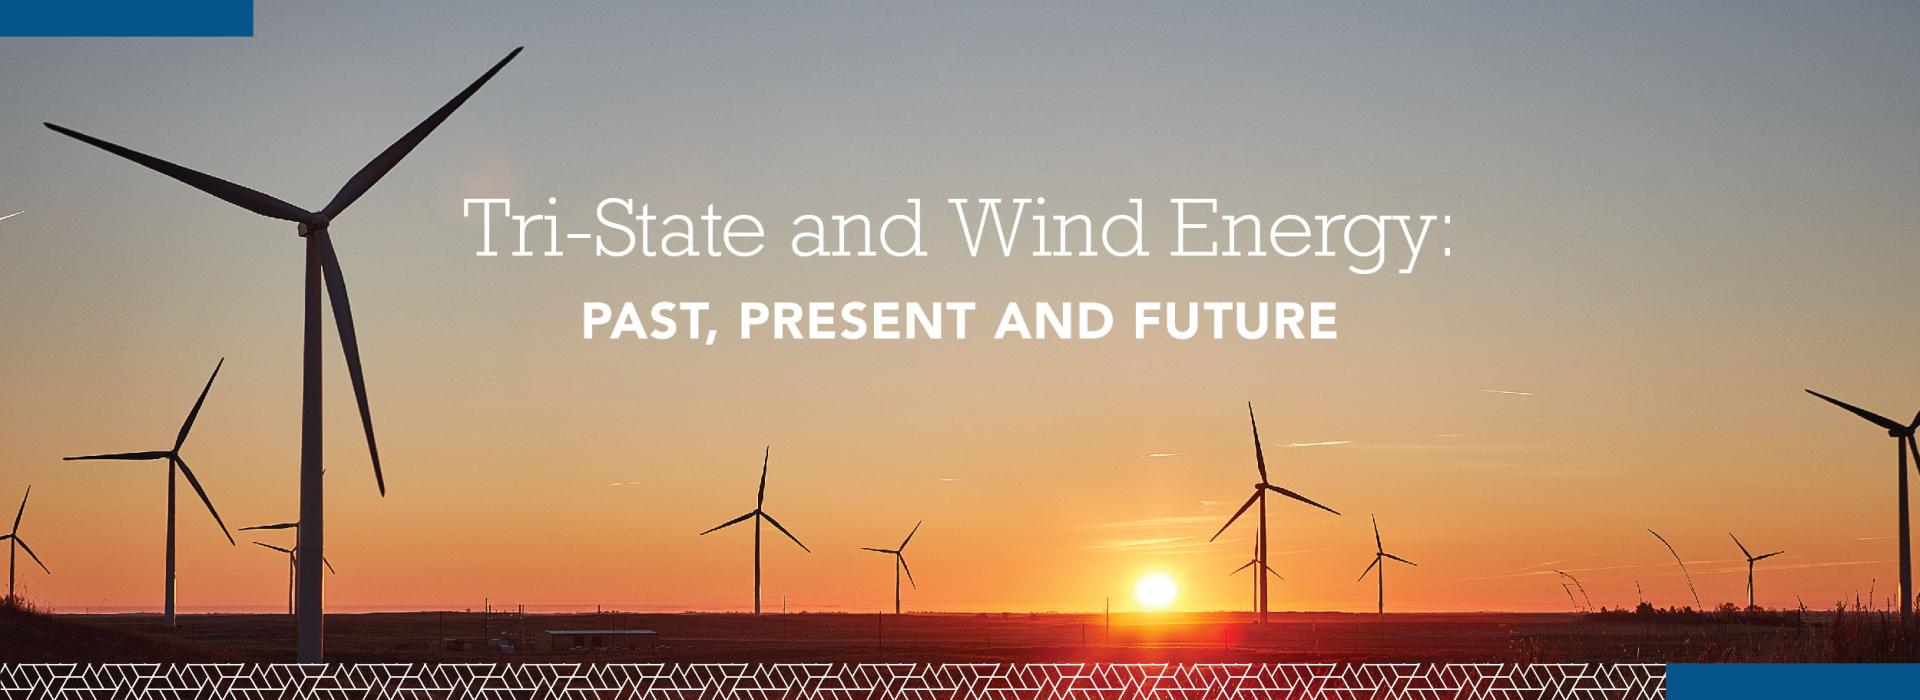 Tris-State Wind Renewable Energy  